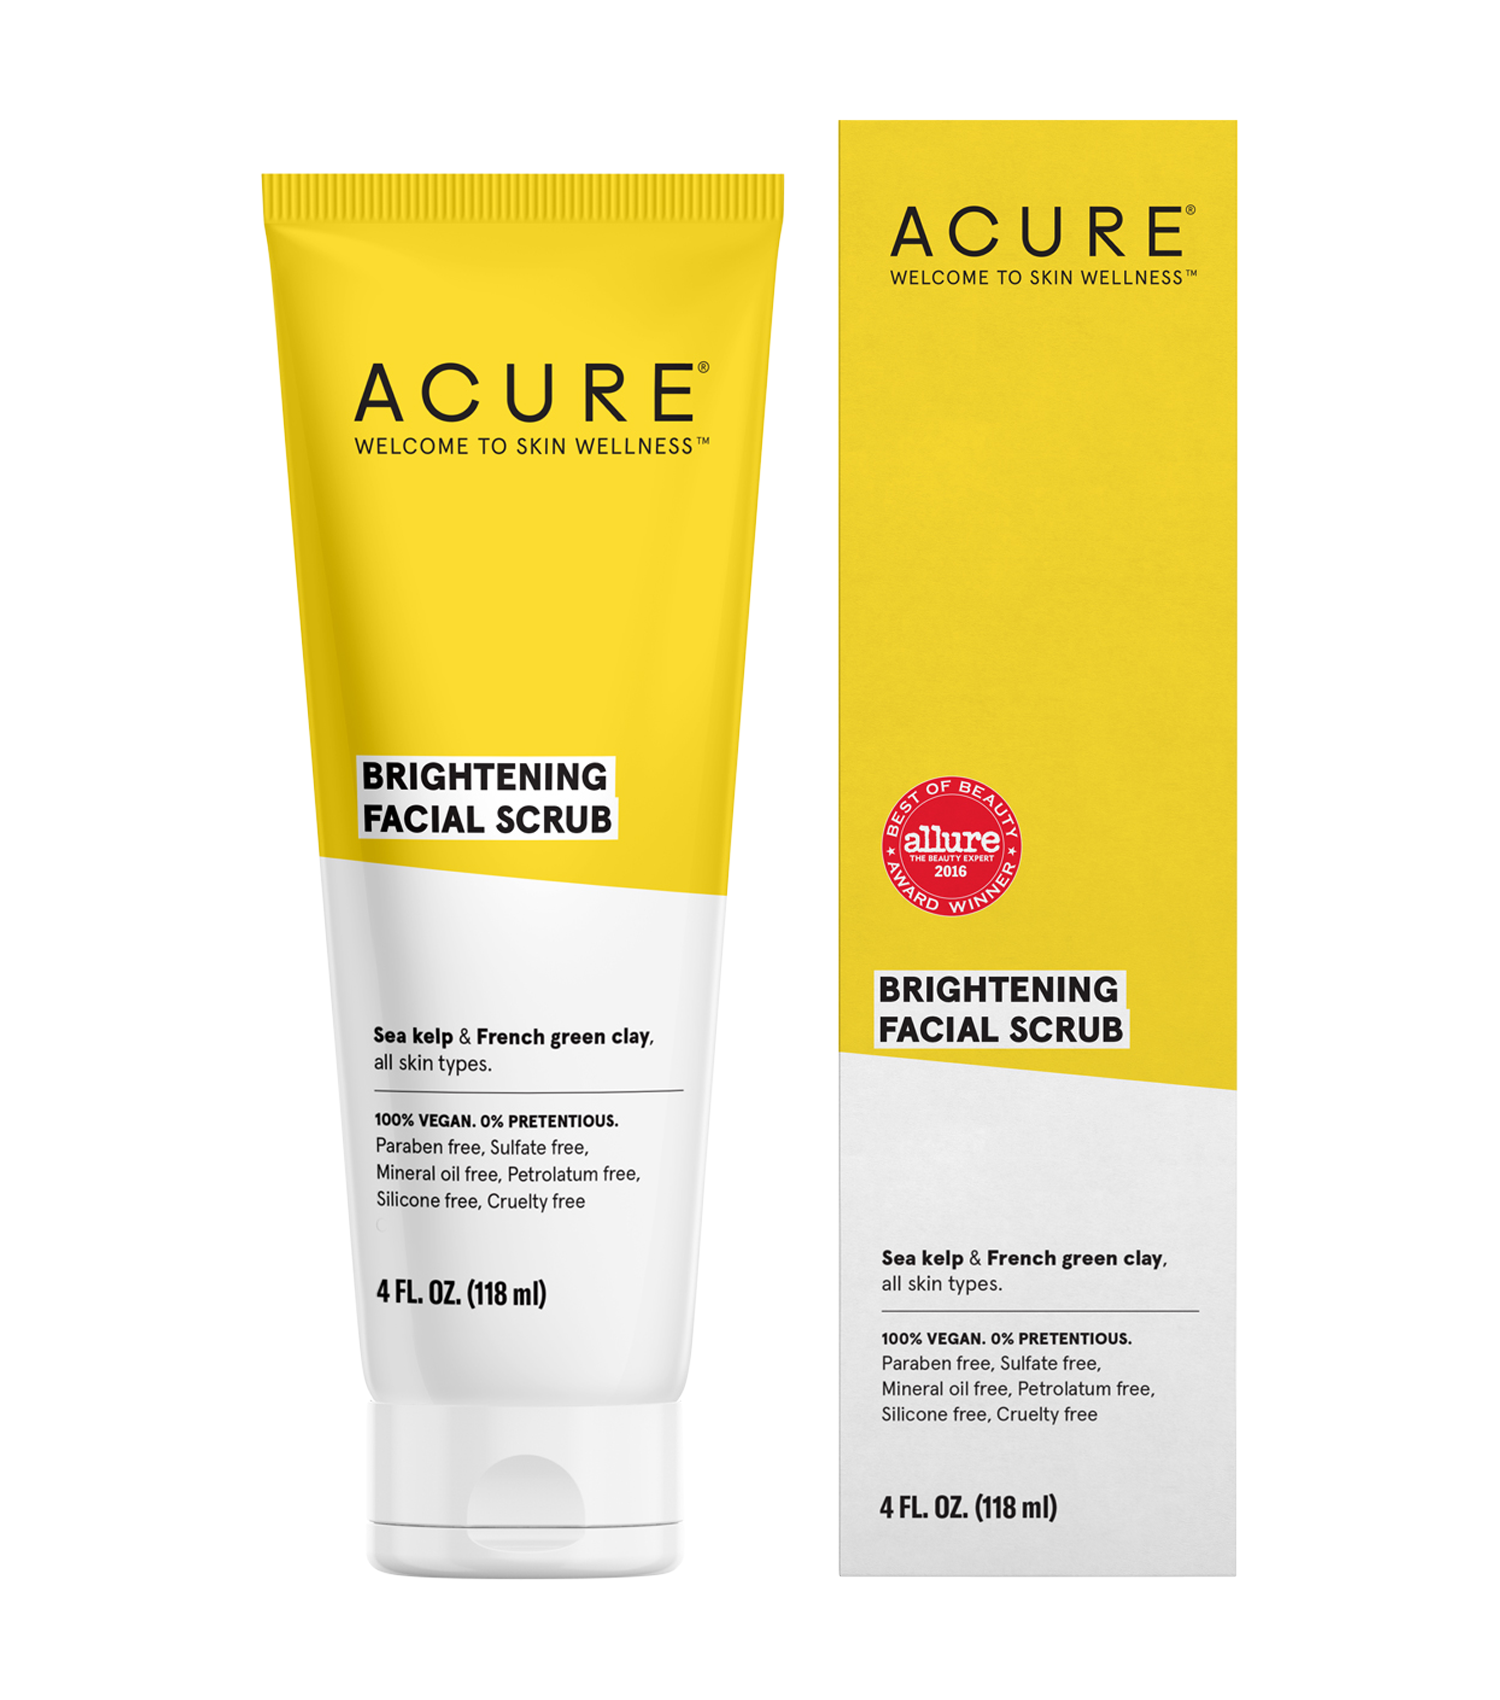 Brightening Facial Scrub Acure Organics Brilliantly Brightening Facial Scrub - Deluxe - 30ml - new packaging 2017 1